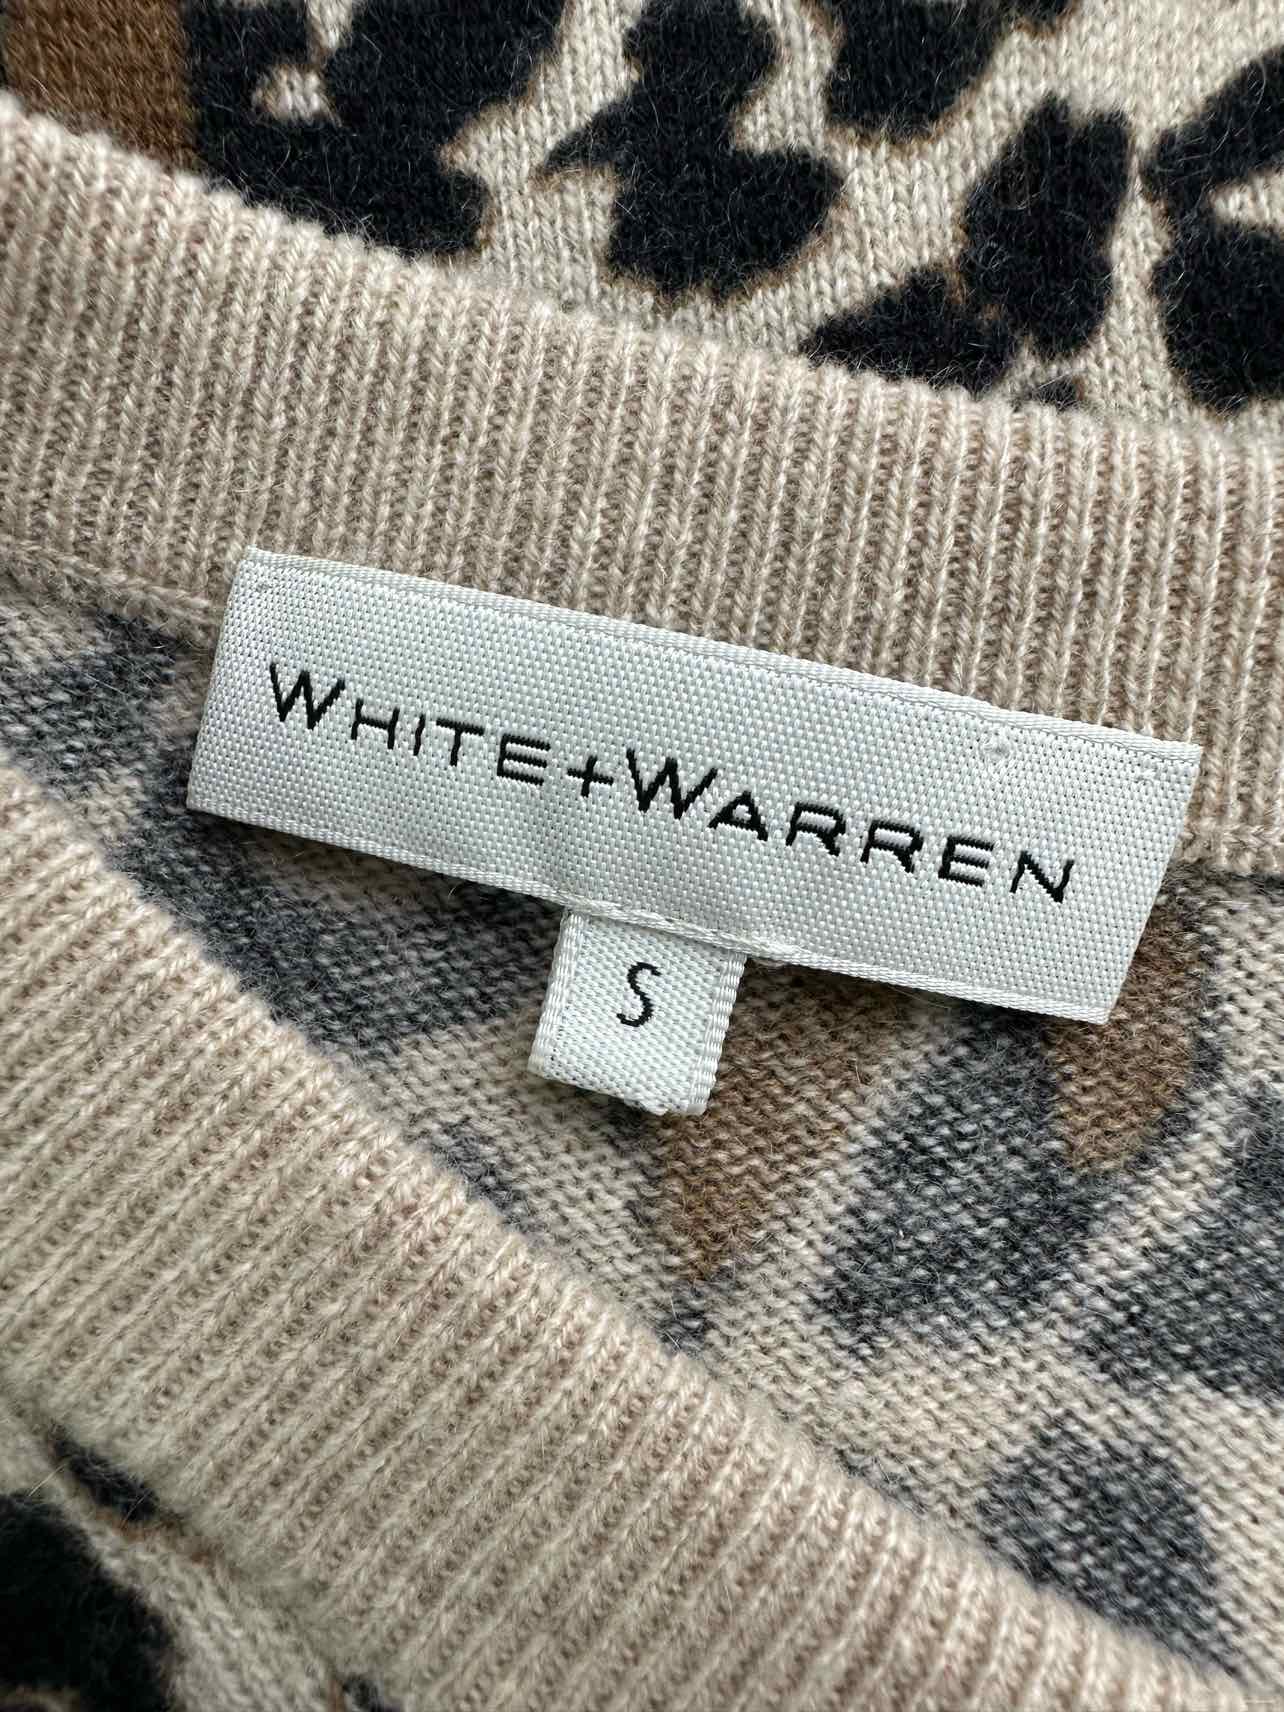 WHITE + WARREN Tan 100% Cashmere Leopard Print Sweater Size S